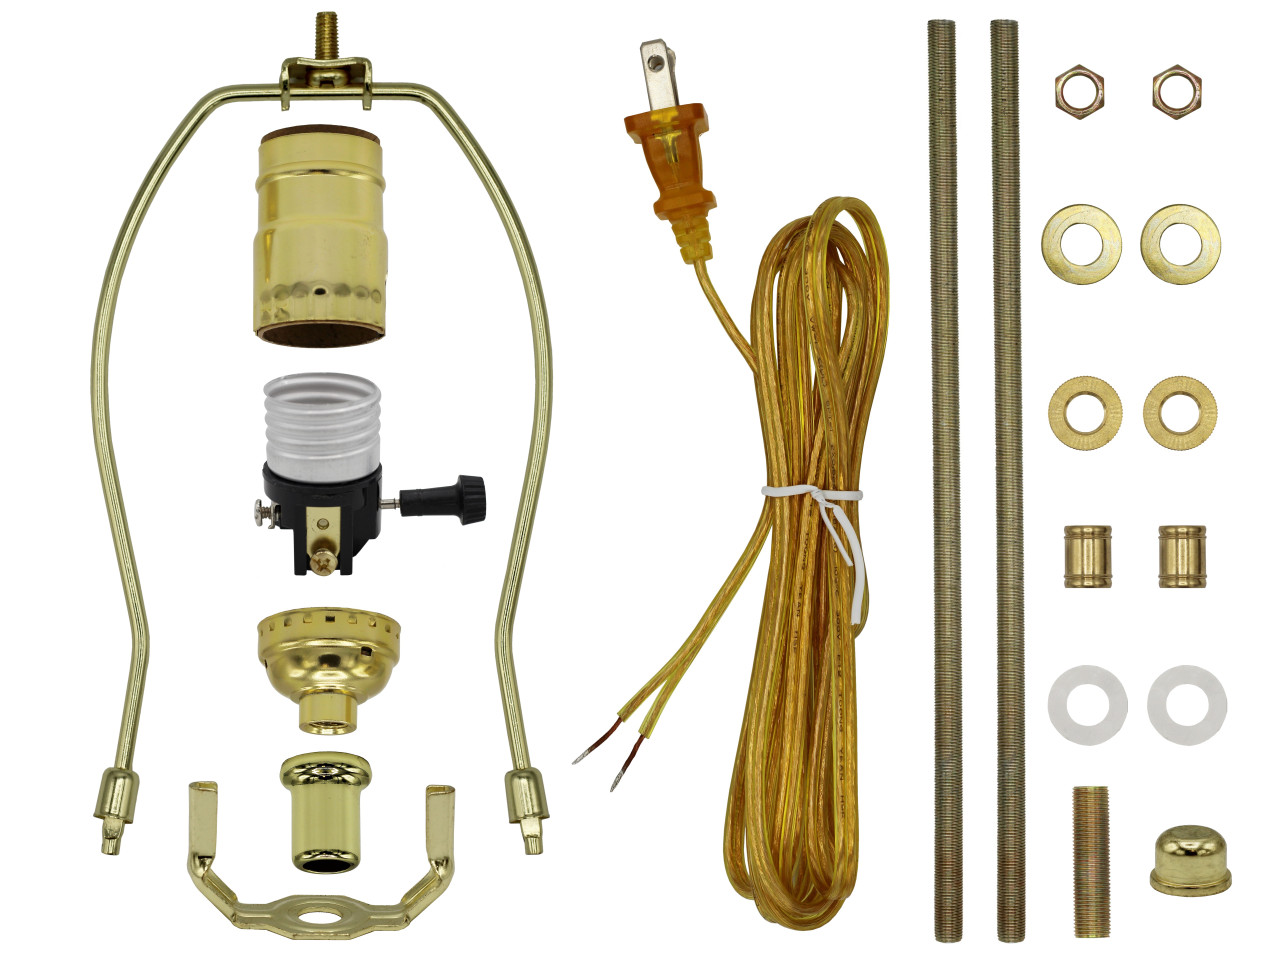 ML94KIT Premium Lamp Kit with All Parts for DIY Lamp Design or